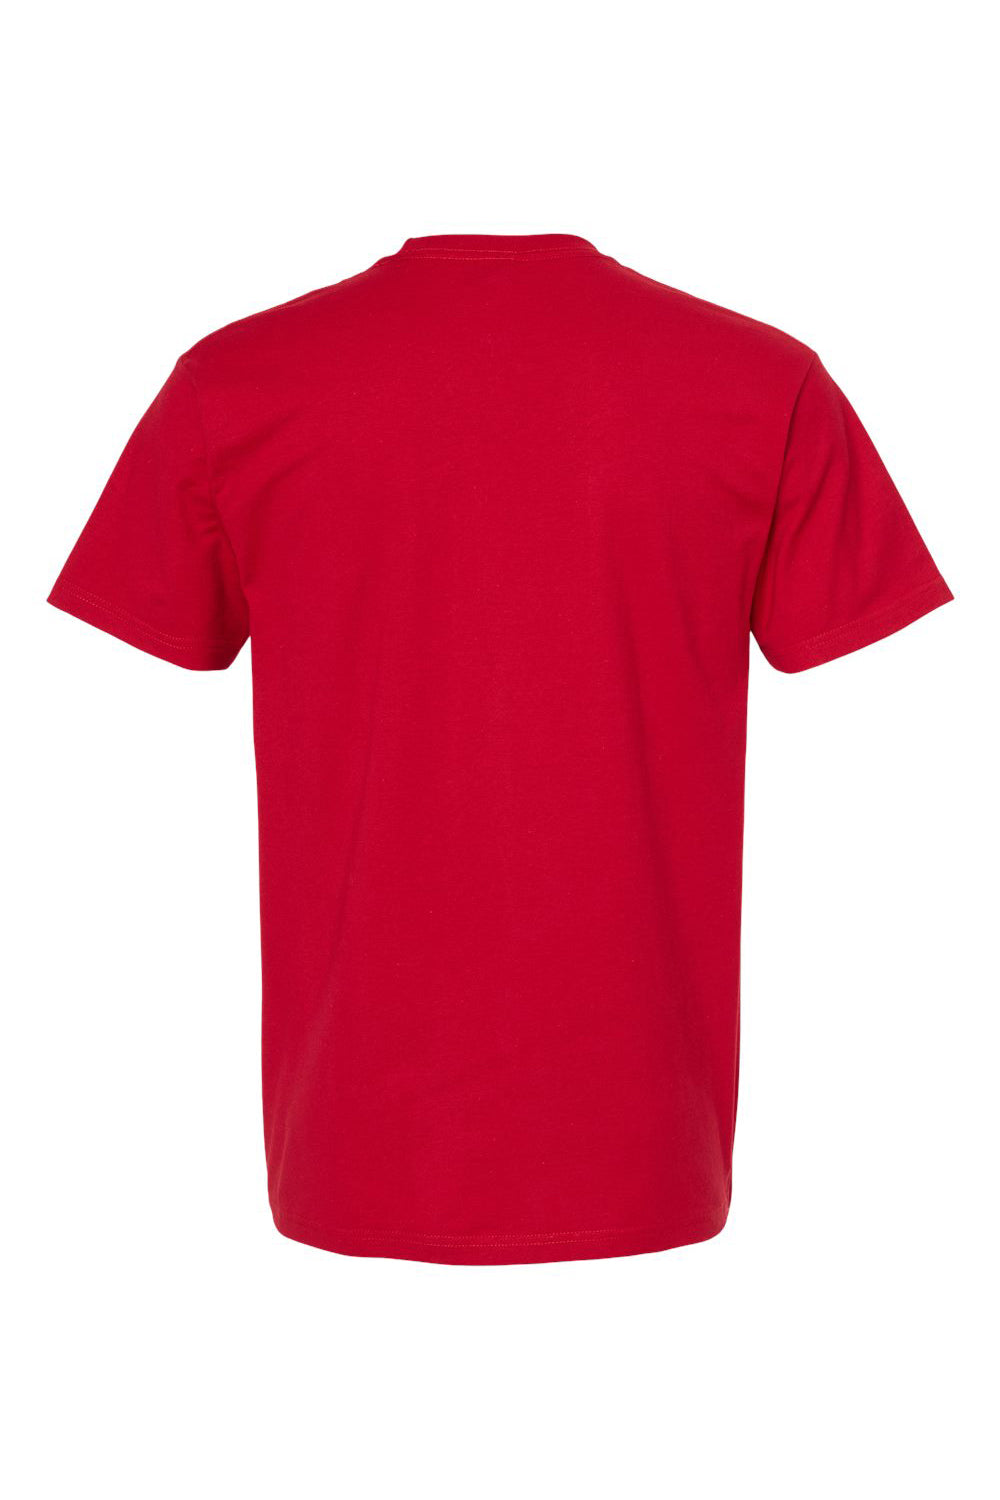 Tultex 290 Mens Jersey Short Sleeve Crewneck T-Shirt Cardinal Red Flat Back